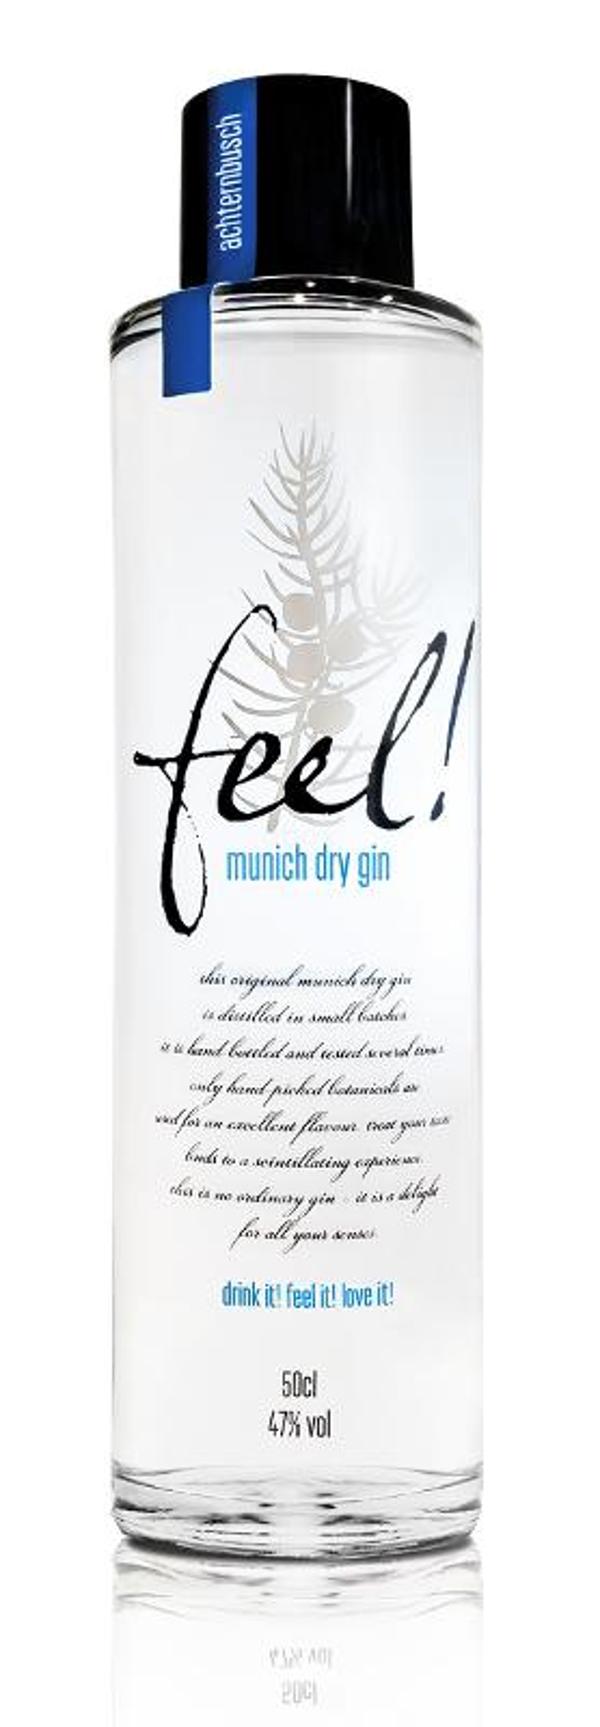 Produktfoto zu Feel Munich Dry Gin 50cl